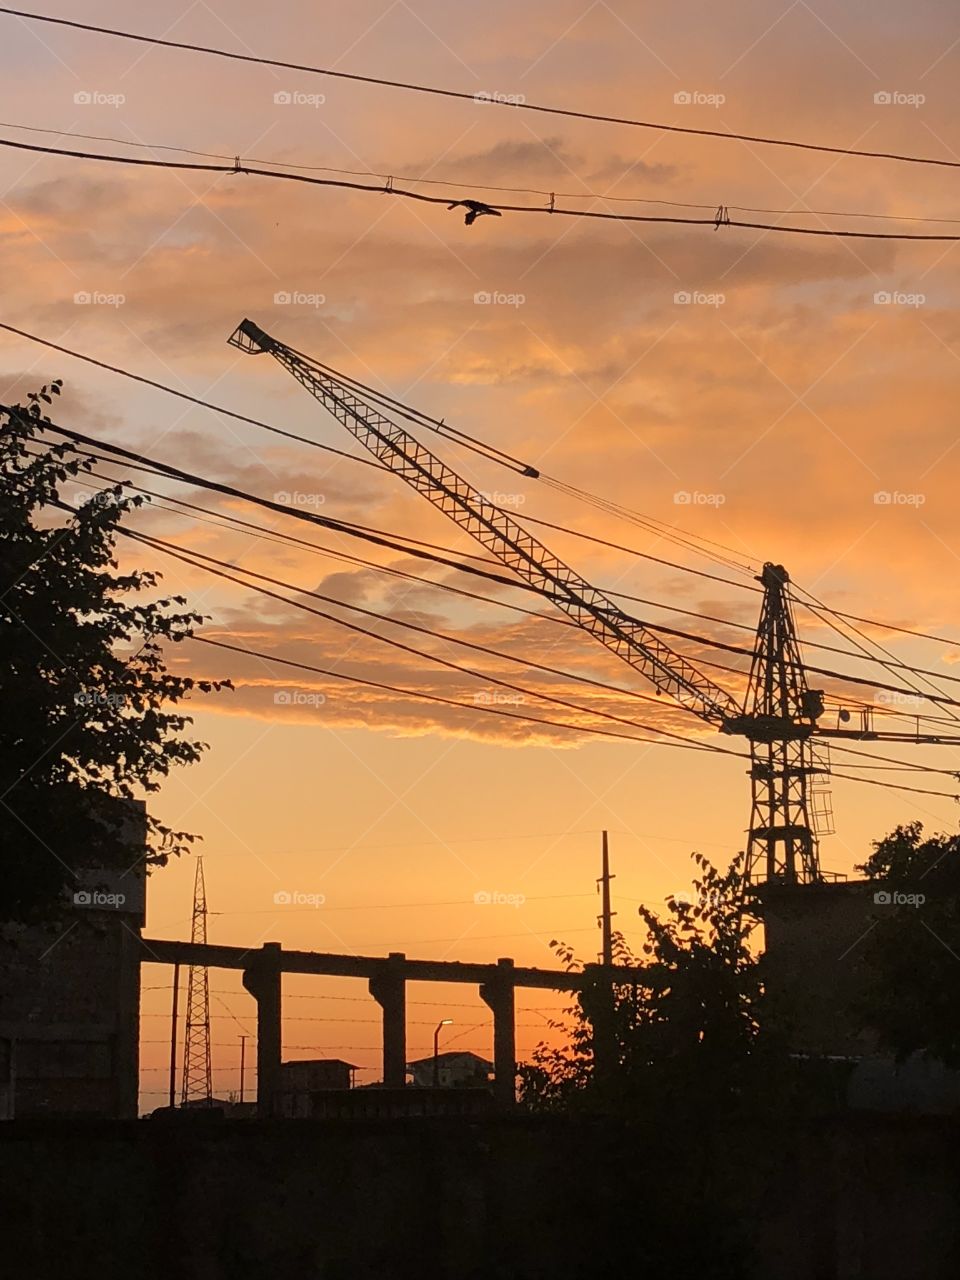 Industrial landscape, orange sky